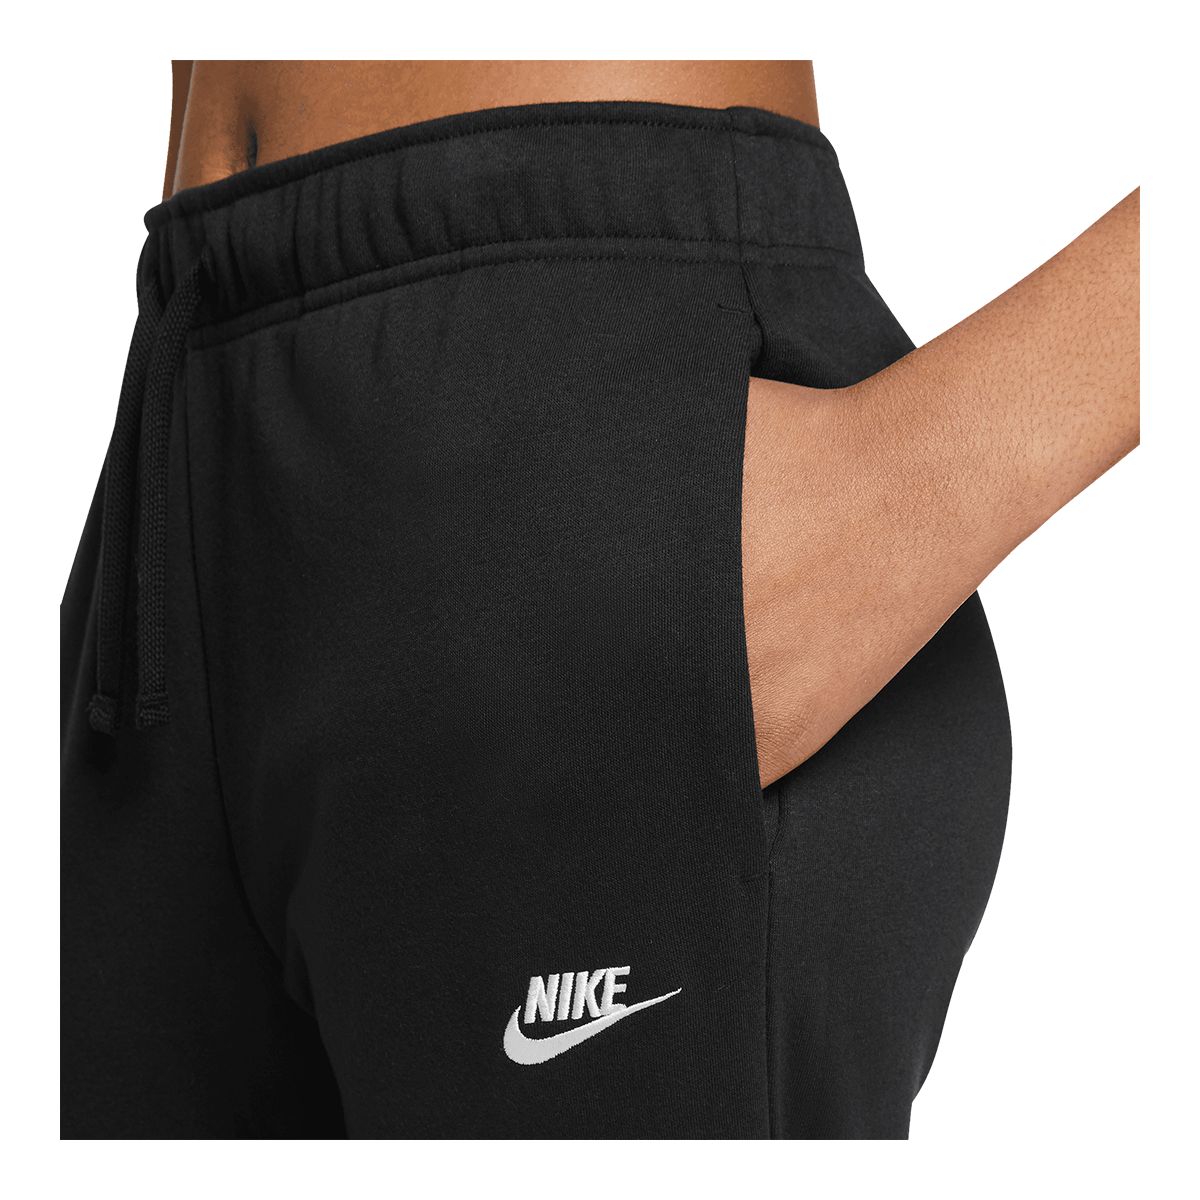 Nike Sportswear Women's Club Fleece Jogger Pants Pink Oxford/White